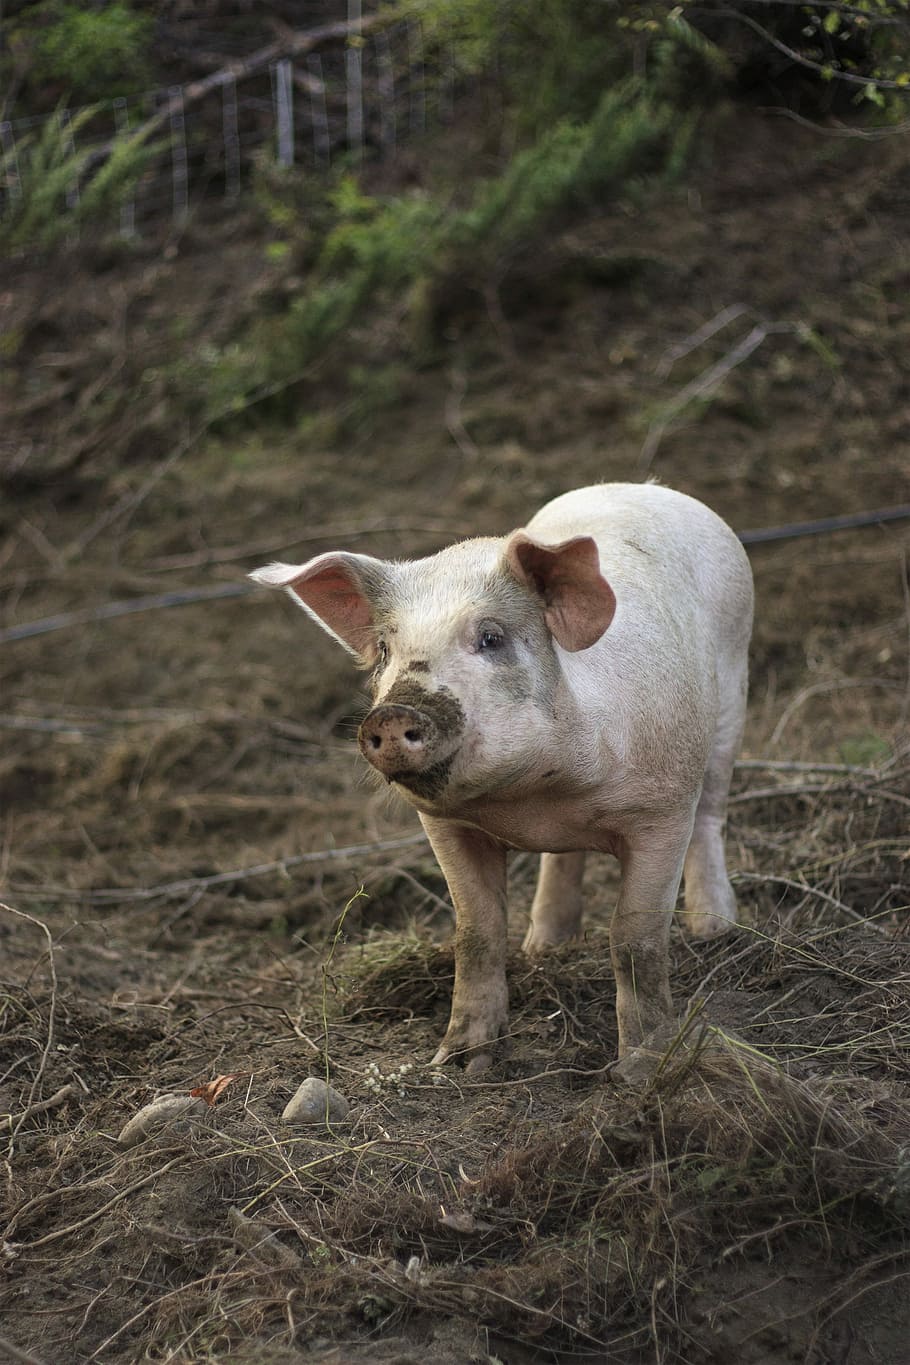 Farm, Pig, Animal, Agriculture, animal, agriculture, livestock, farming, piggy, cute, swine